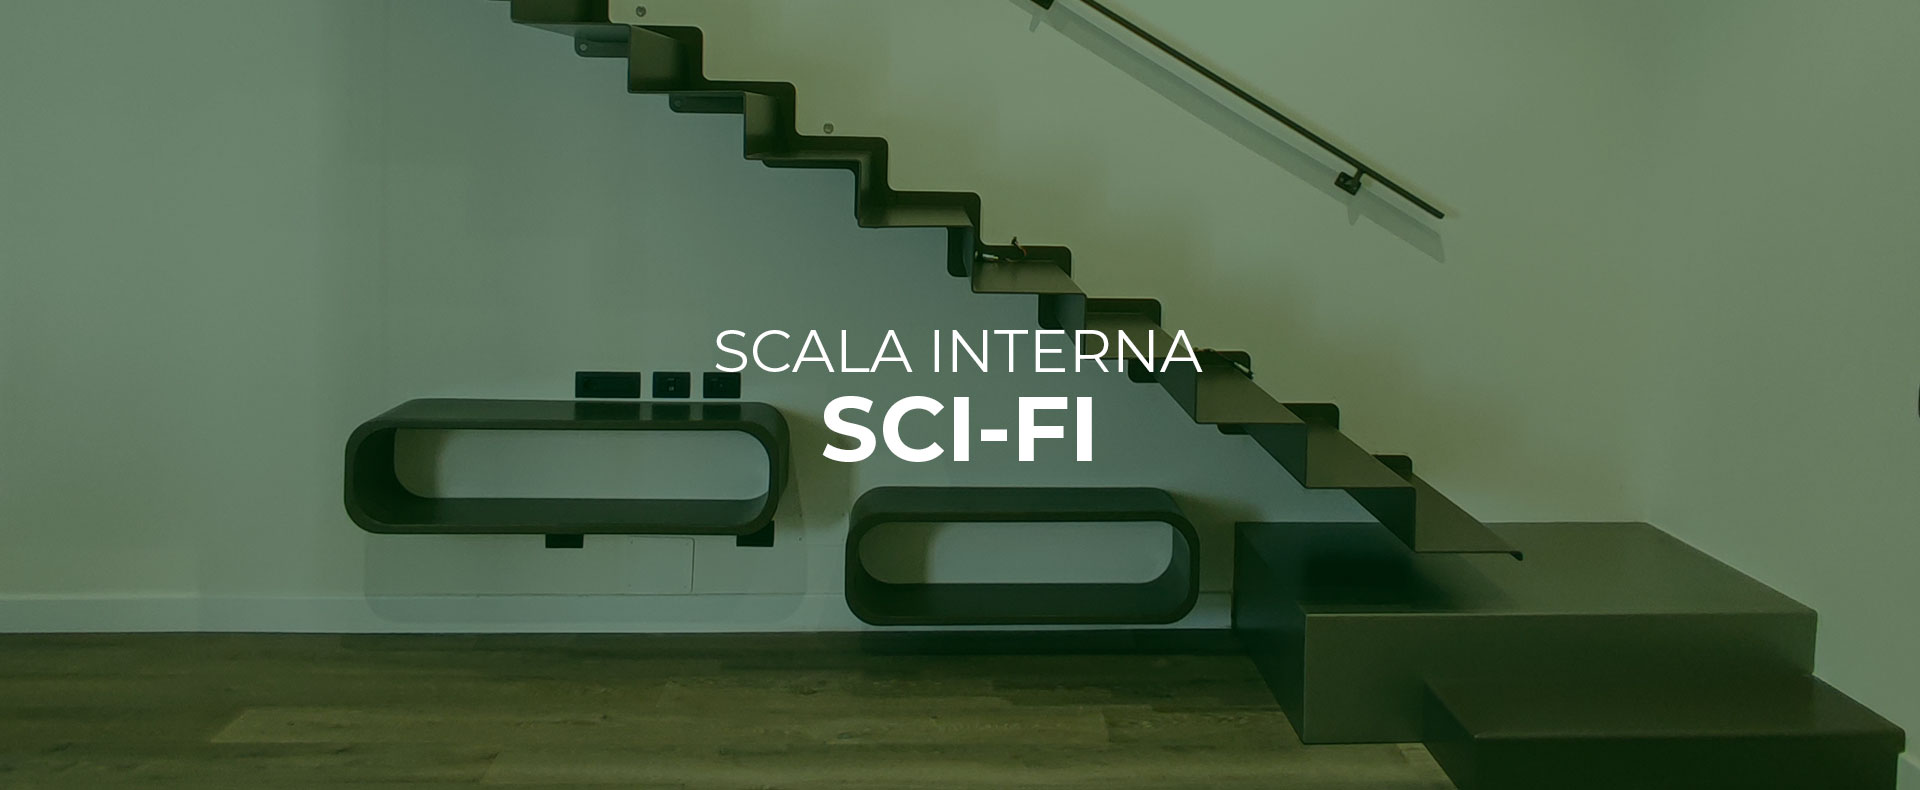 scala-interna-stile-industriale-arredamento-industrial-roma-latina-provincia-orsolini-design